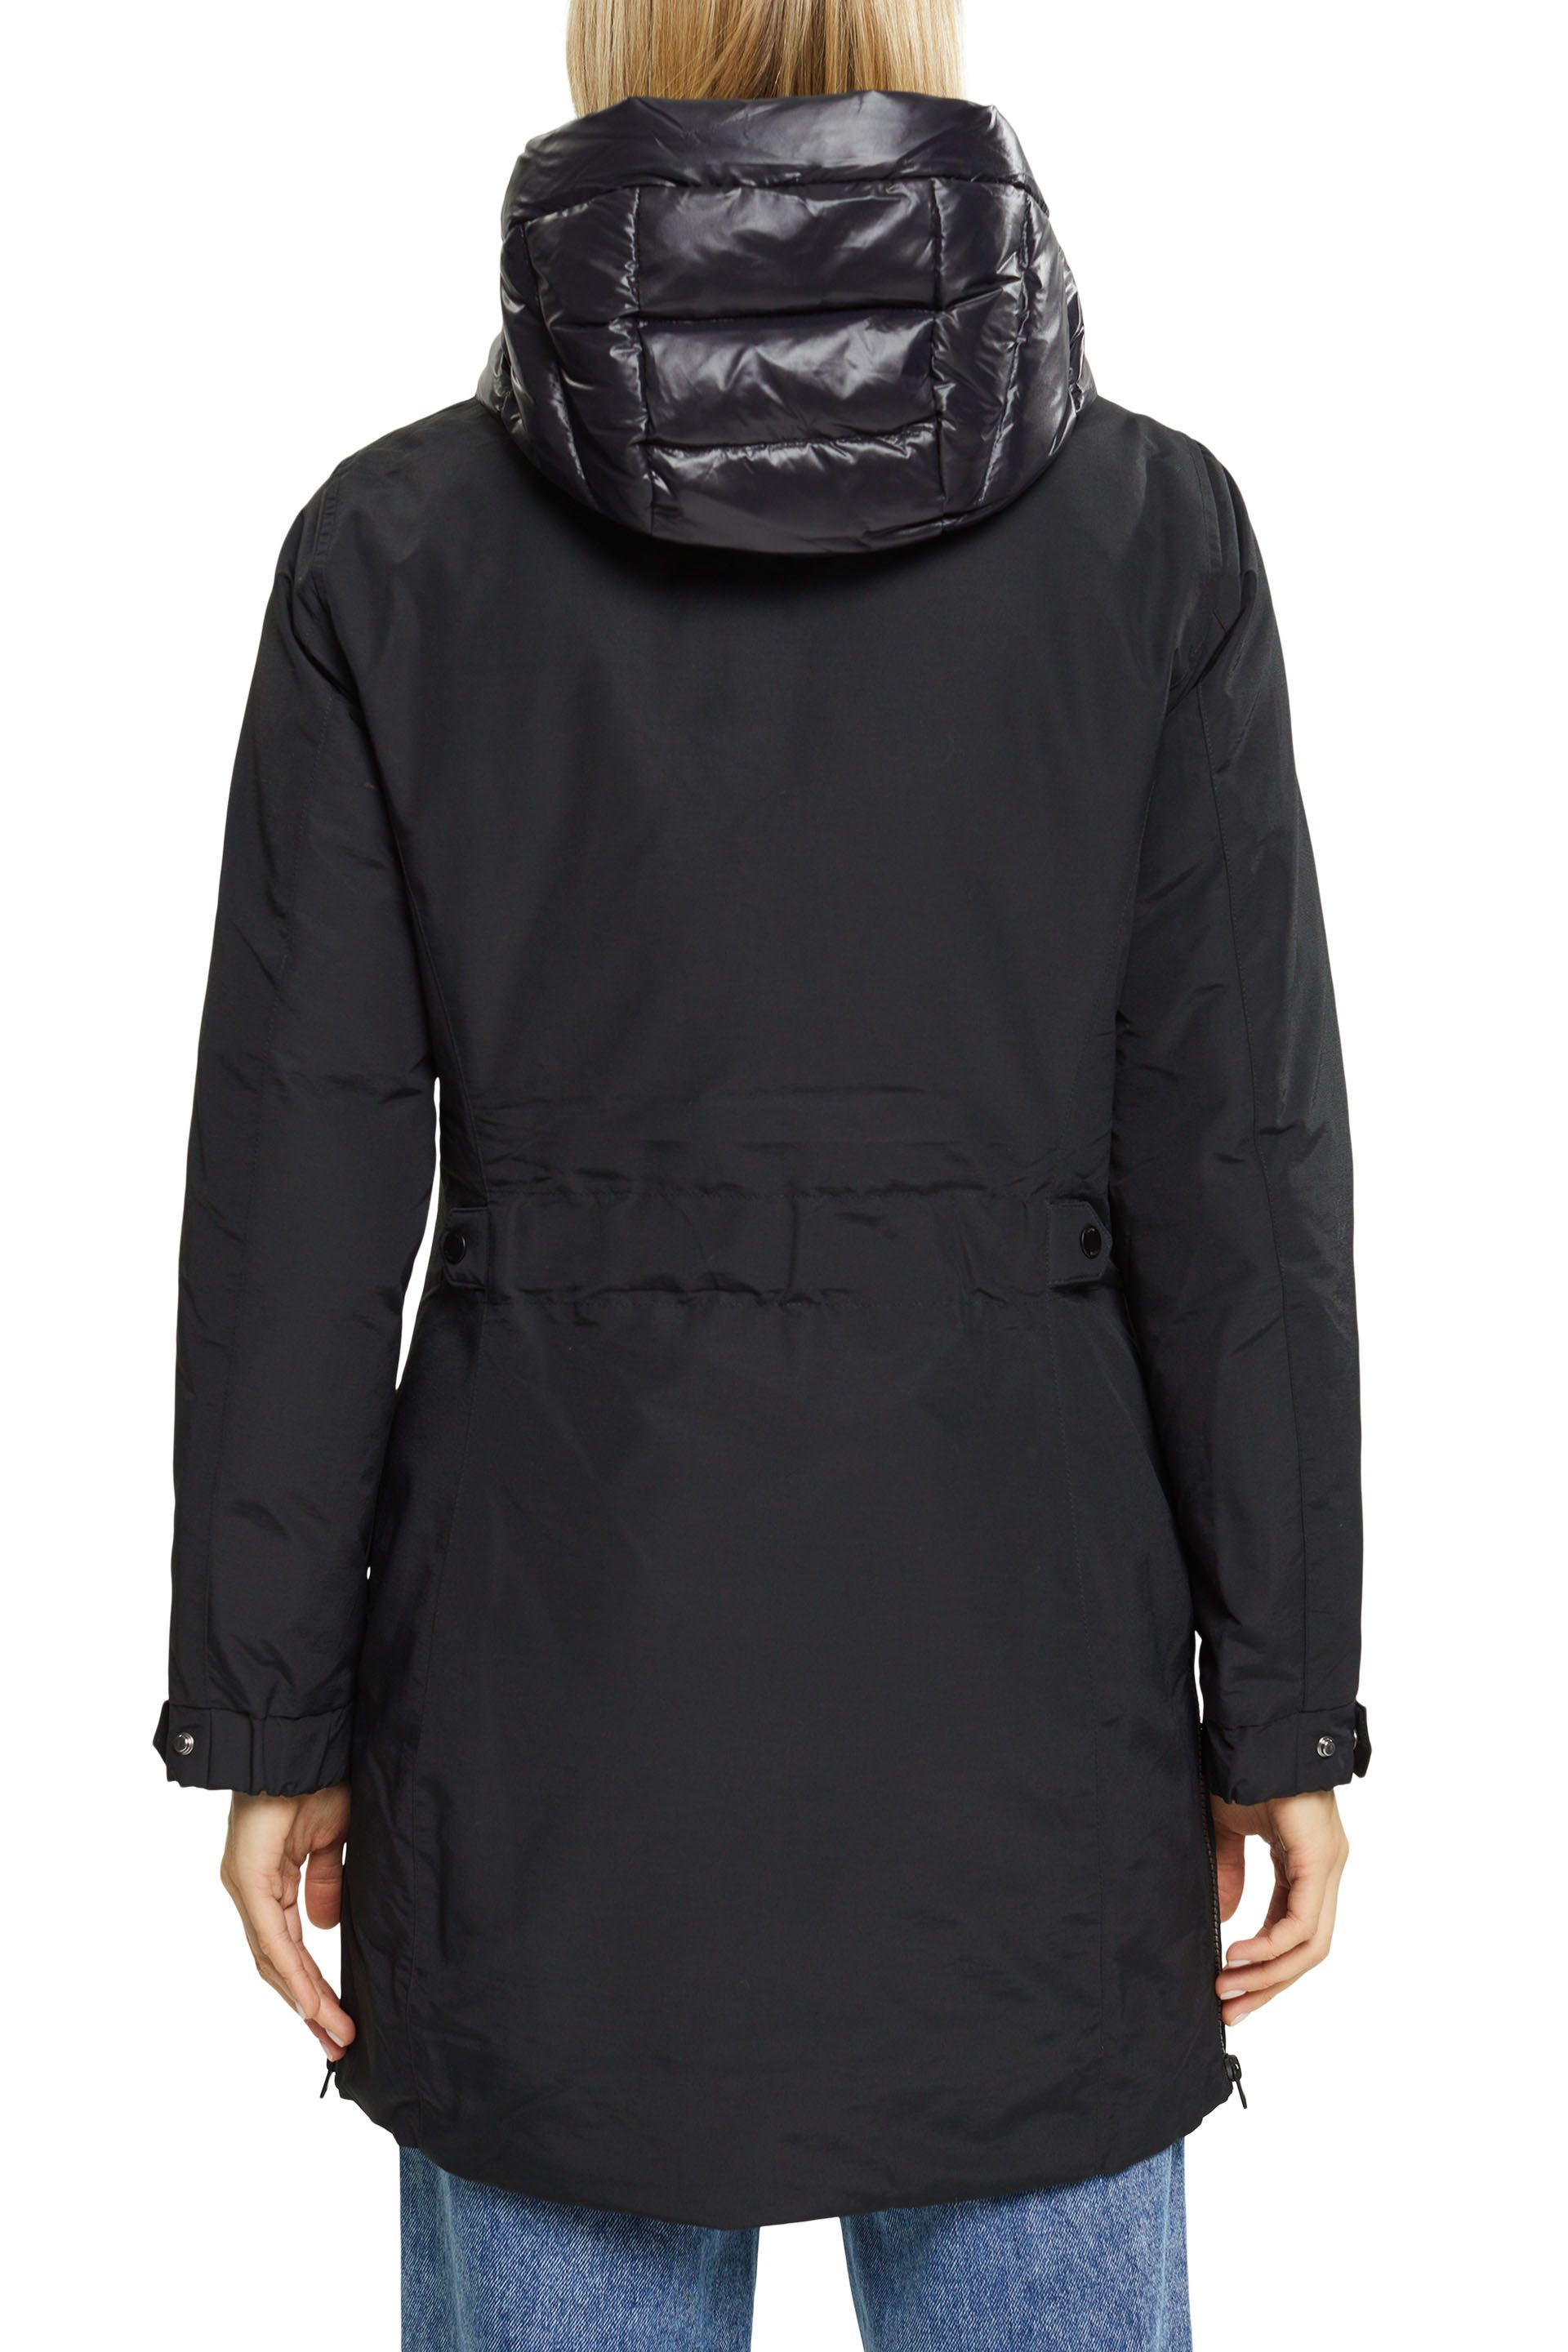 Hooded jacket with padding, Black, large image number 2